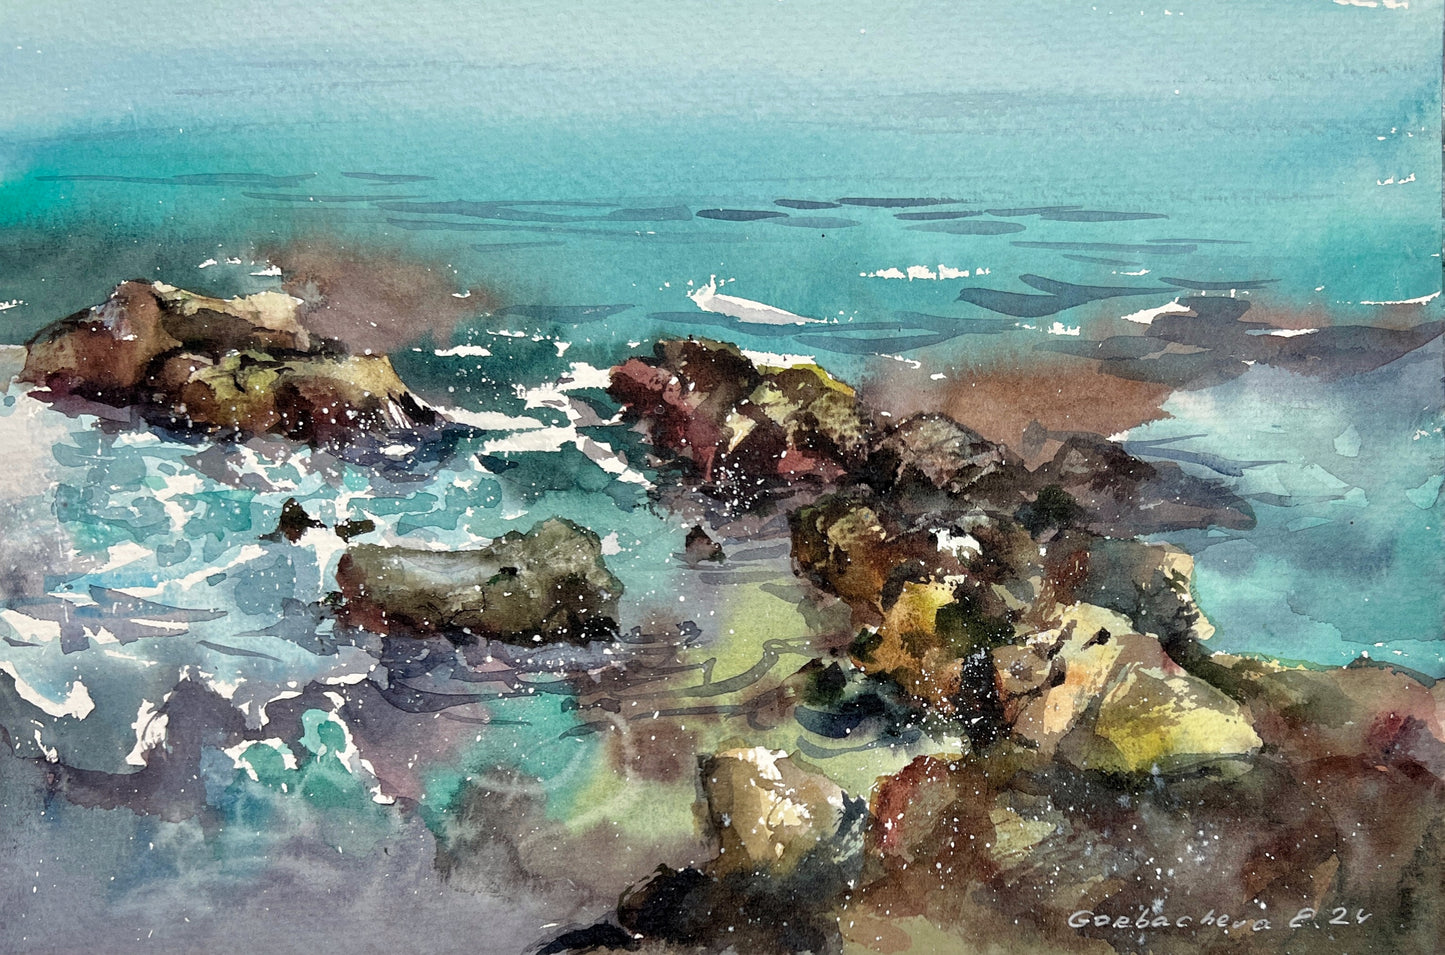 Watercolor Original Painting, Seascape Artwork - Waves and rocks #17